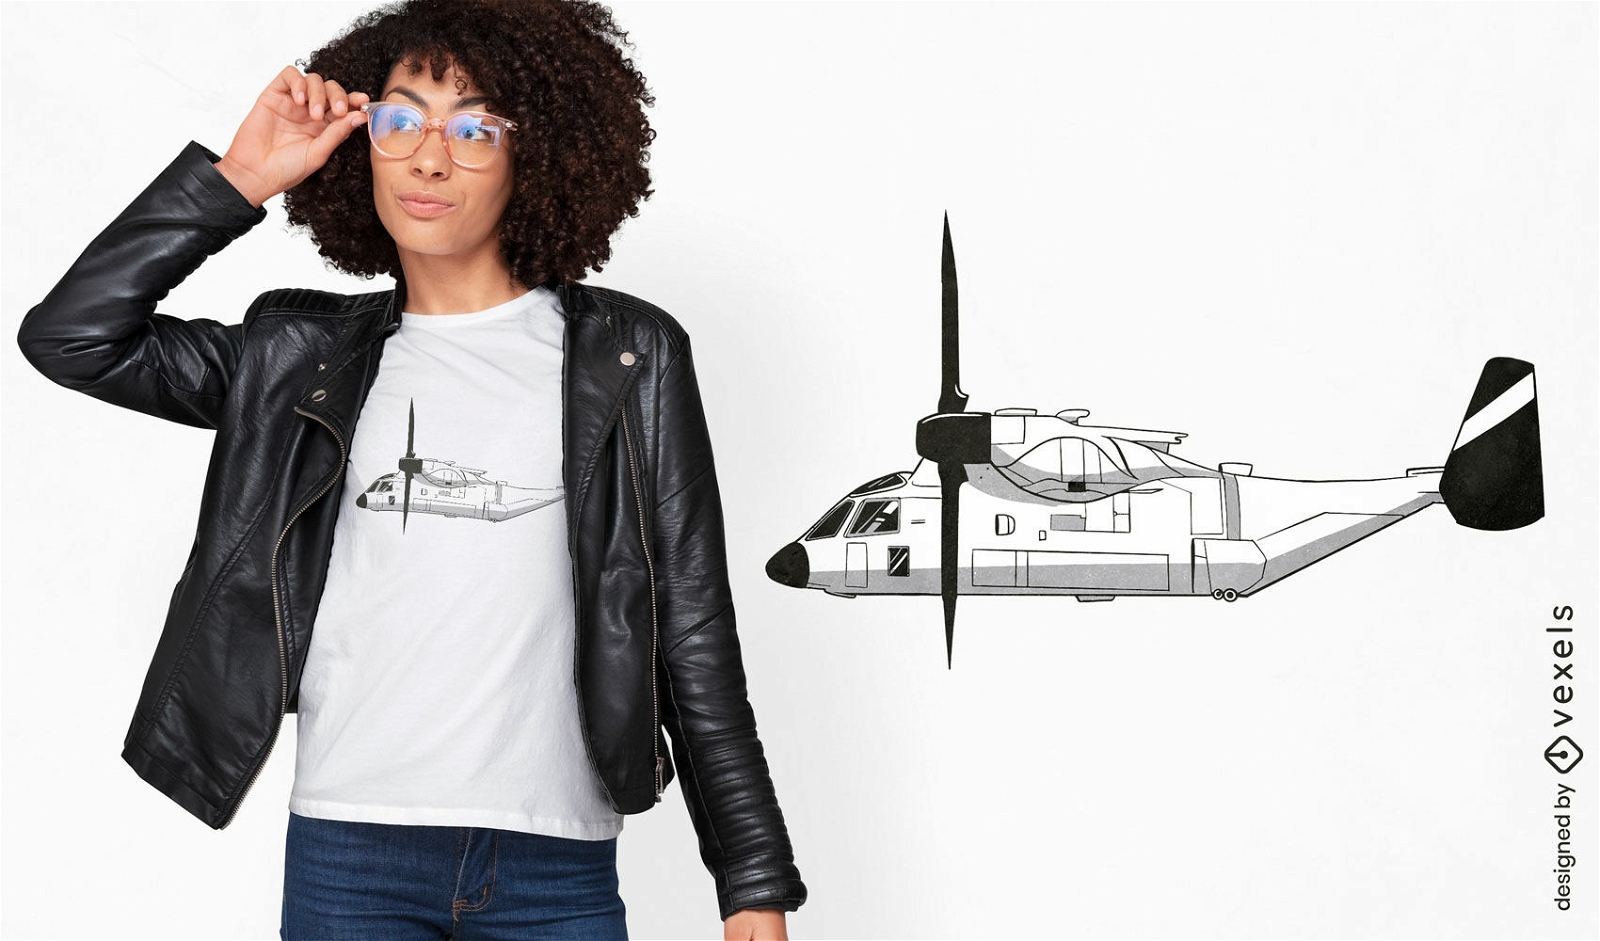  Plane side view t-shirt design